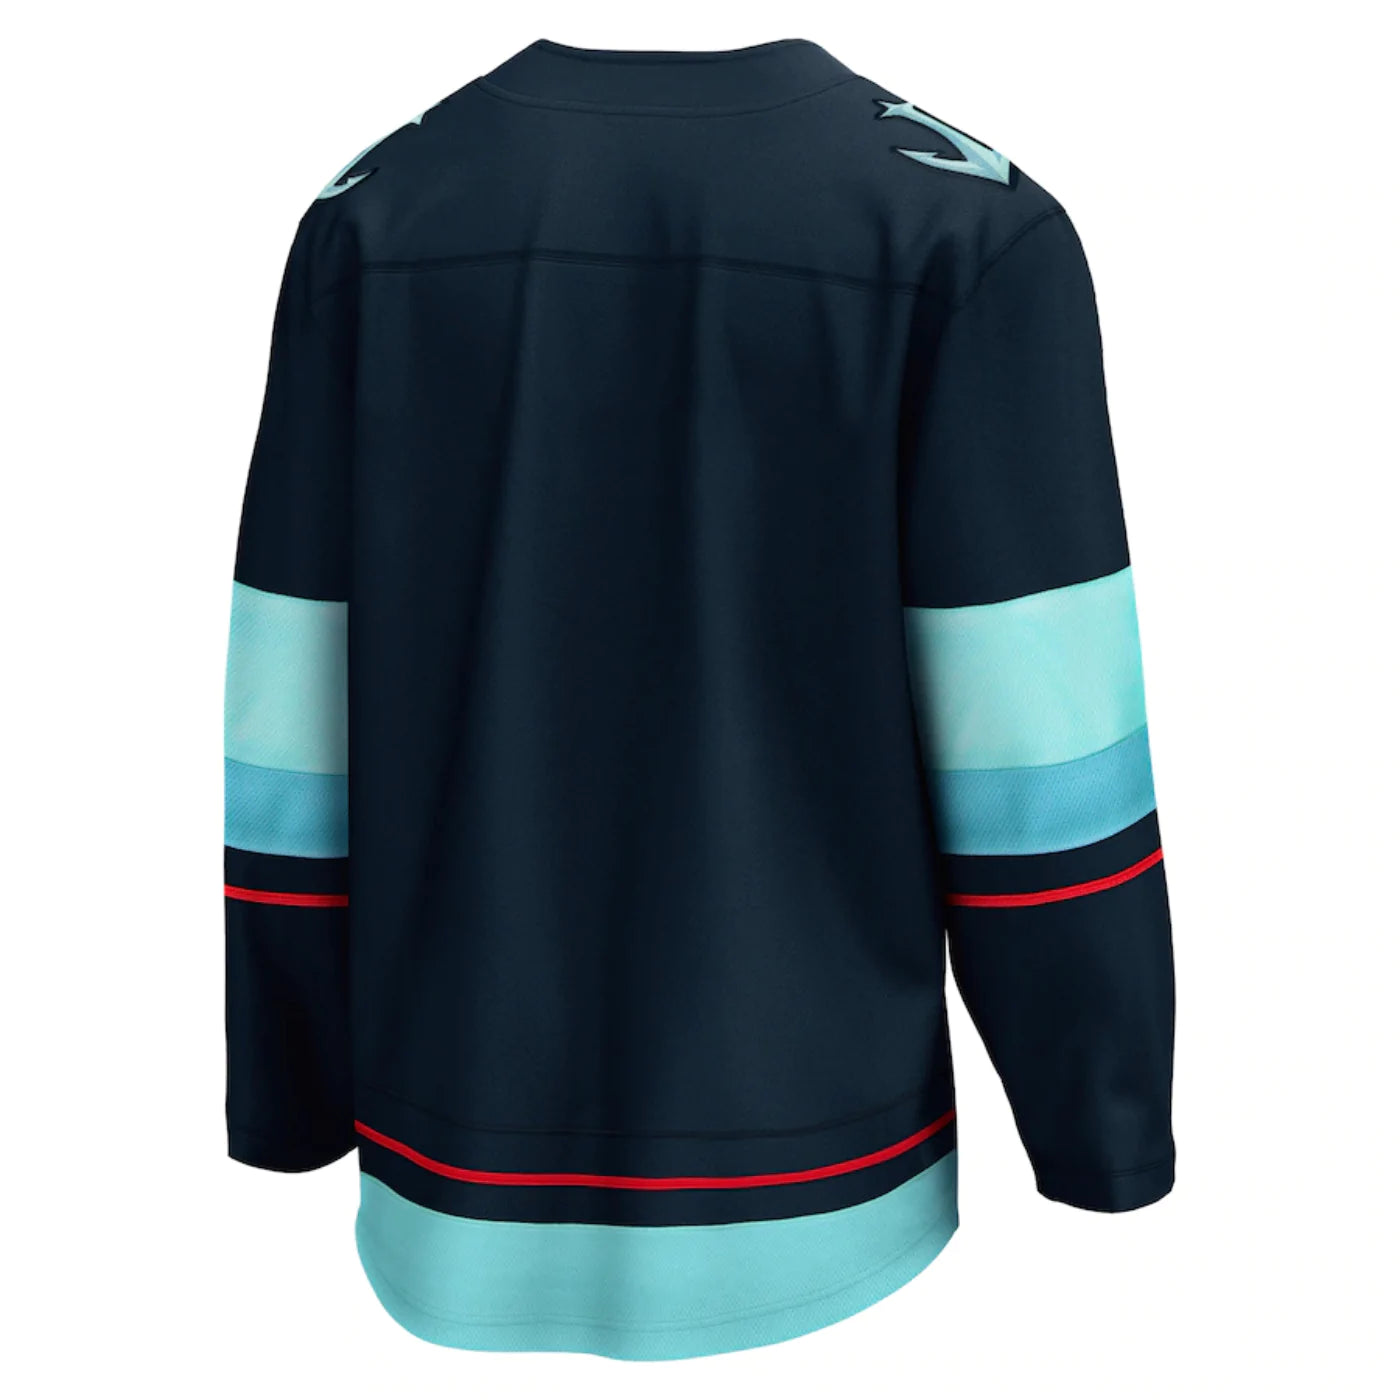 NHL Seattle Kraken Custom Name Number Military Jersey Camo Fleece Oodie